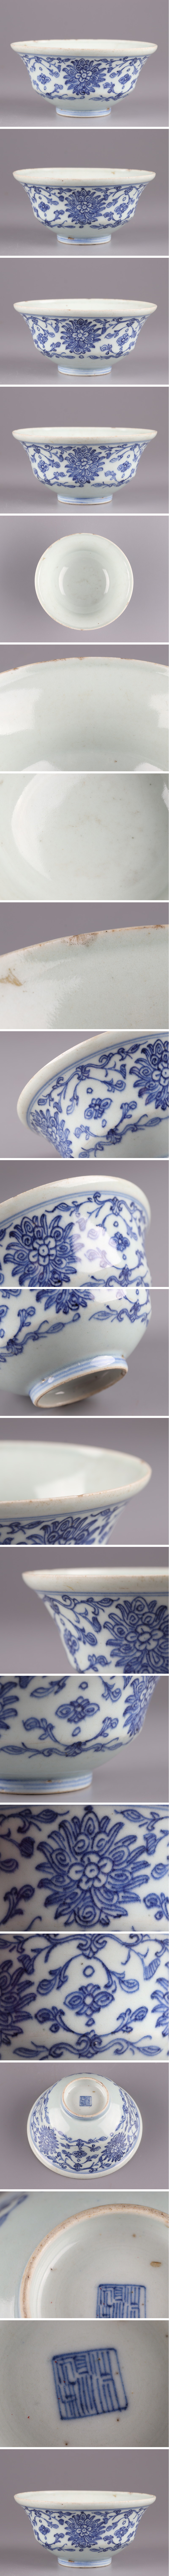 【リアル】中国古玩 唐物 染付 青華 在印 茶碗 古作 時代物 極上品 初だし品 3062 染付